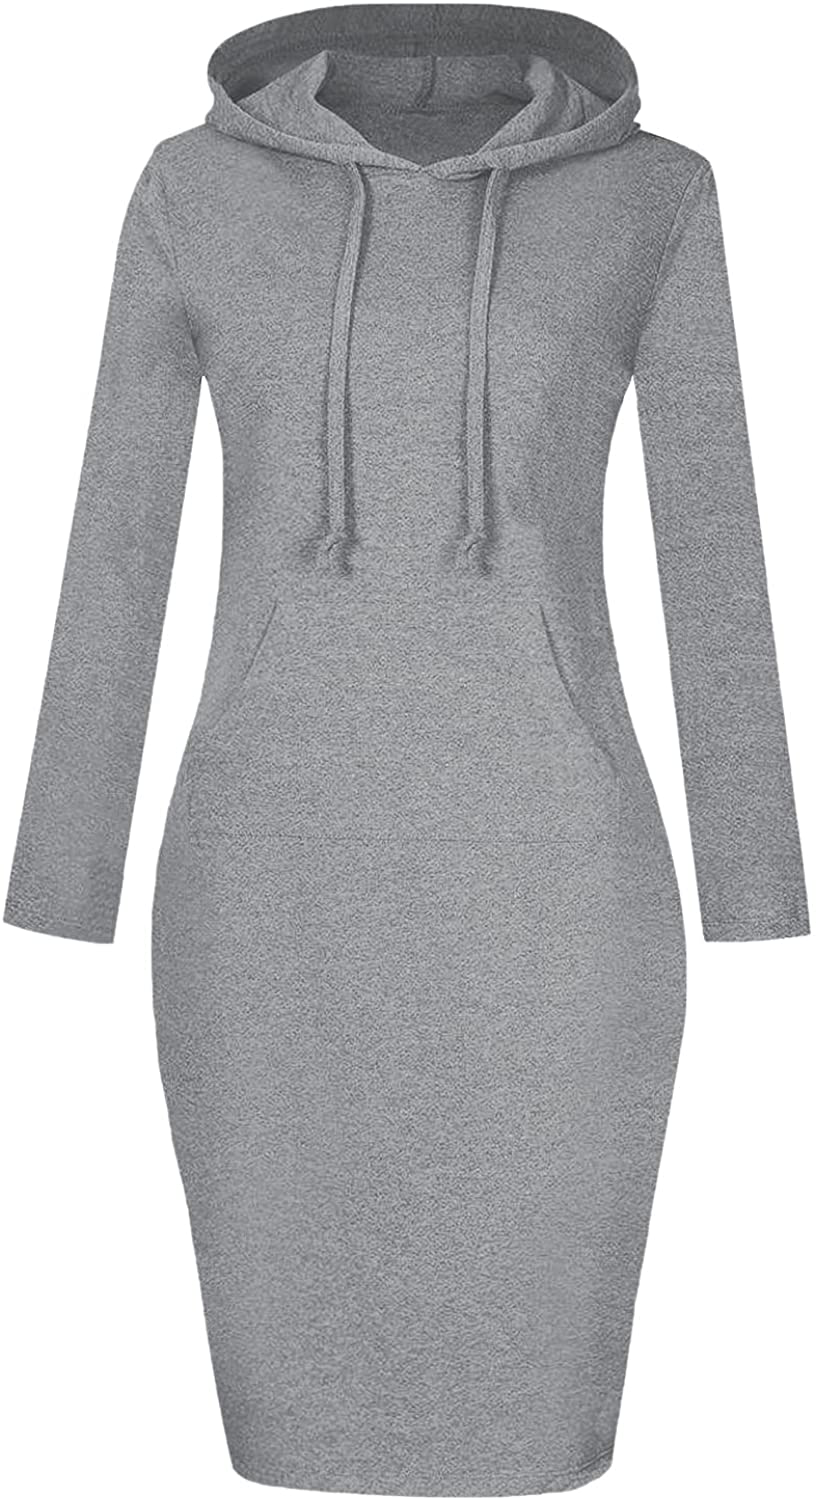 QUALFORT Women’s Hoodie Dress Casual Pocket Pullover Sweatshirt Hooded Dress